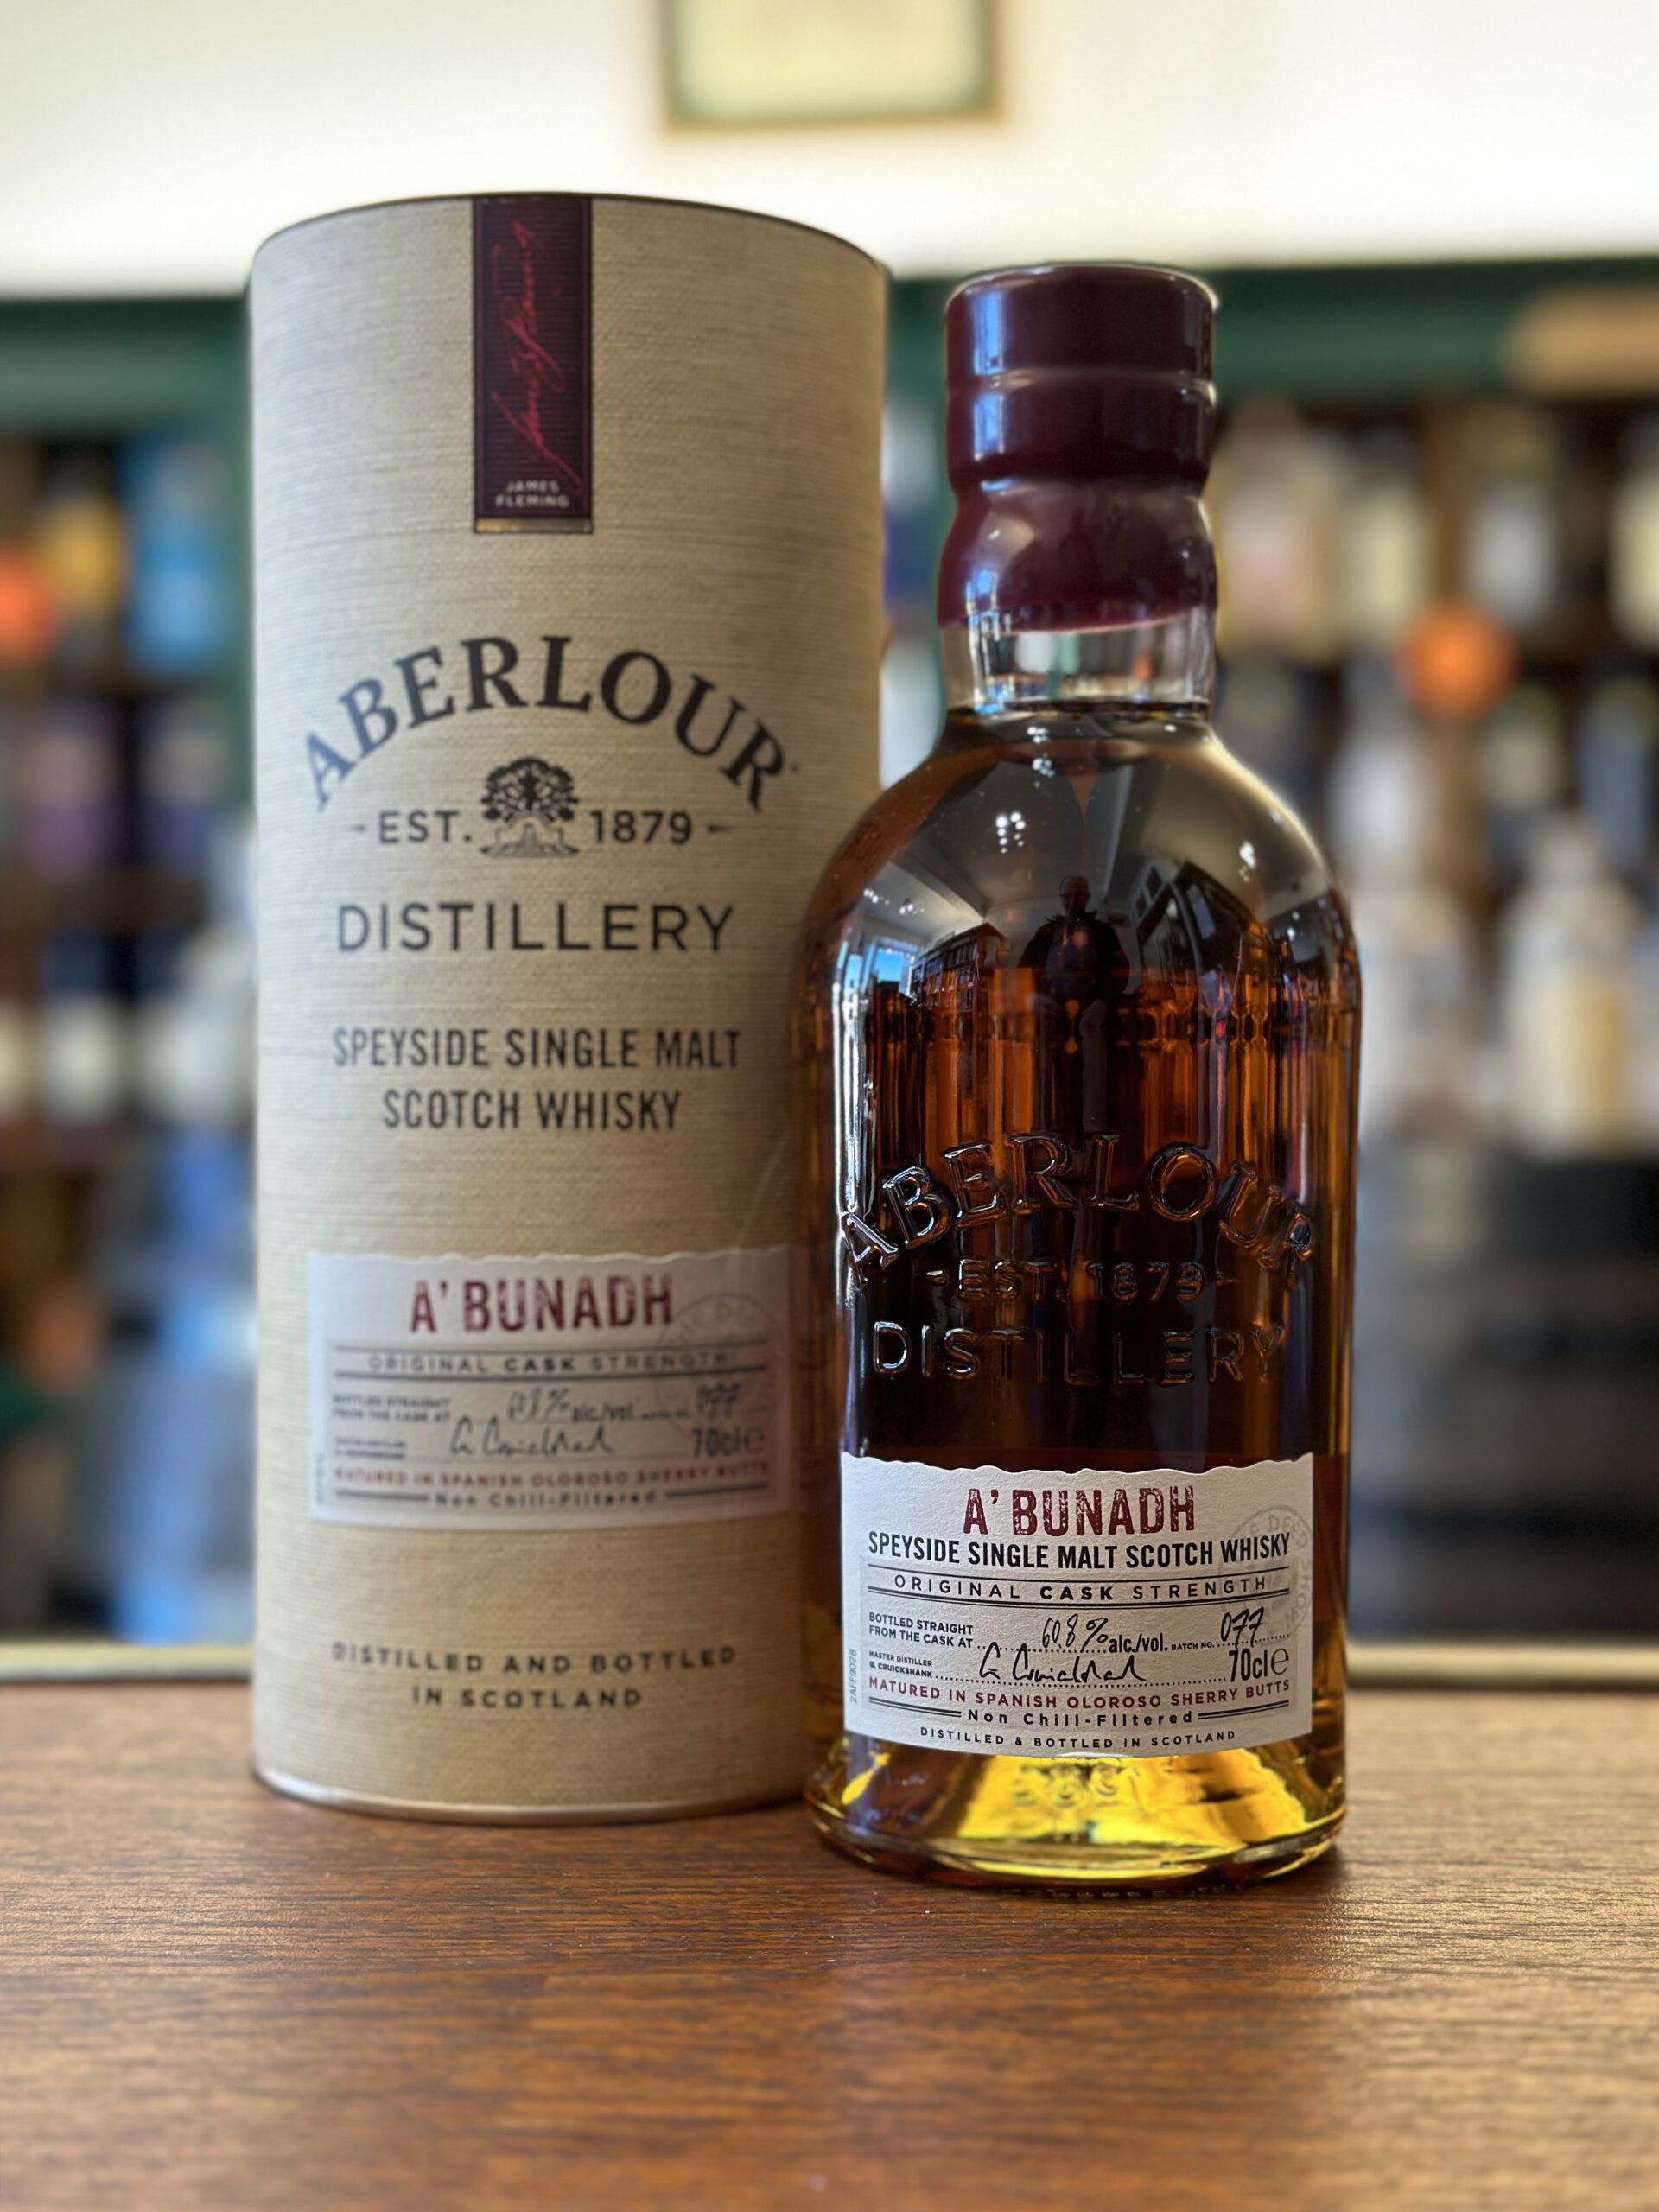 Aberlour 12 Year Single Malt Scotch Whiskey – Bob's Discount Liquor